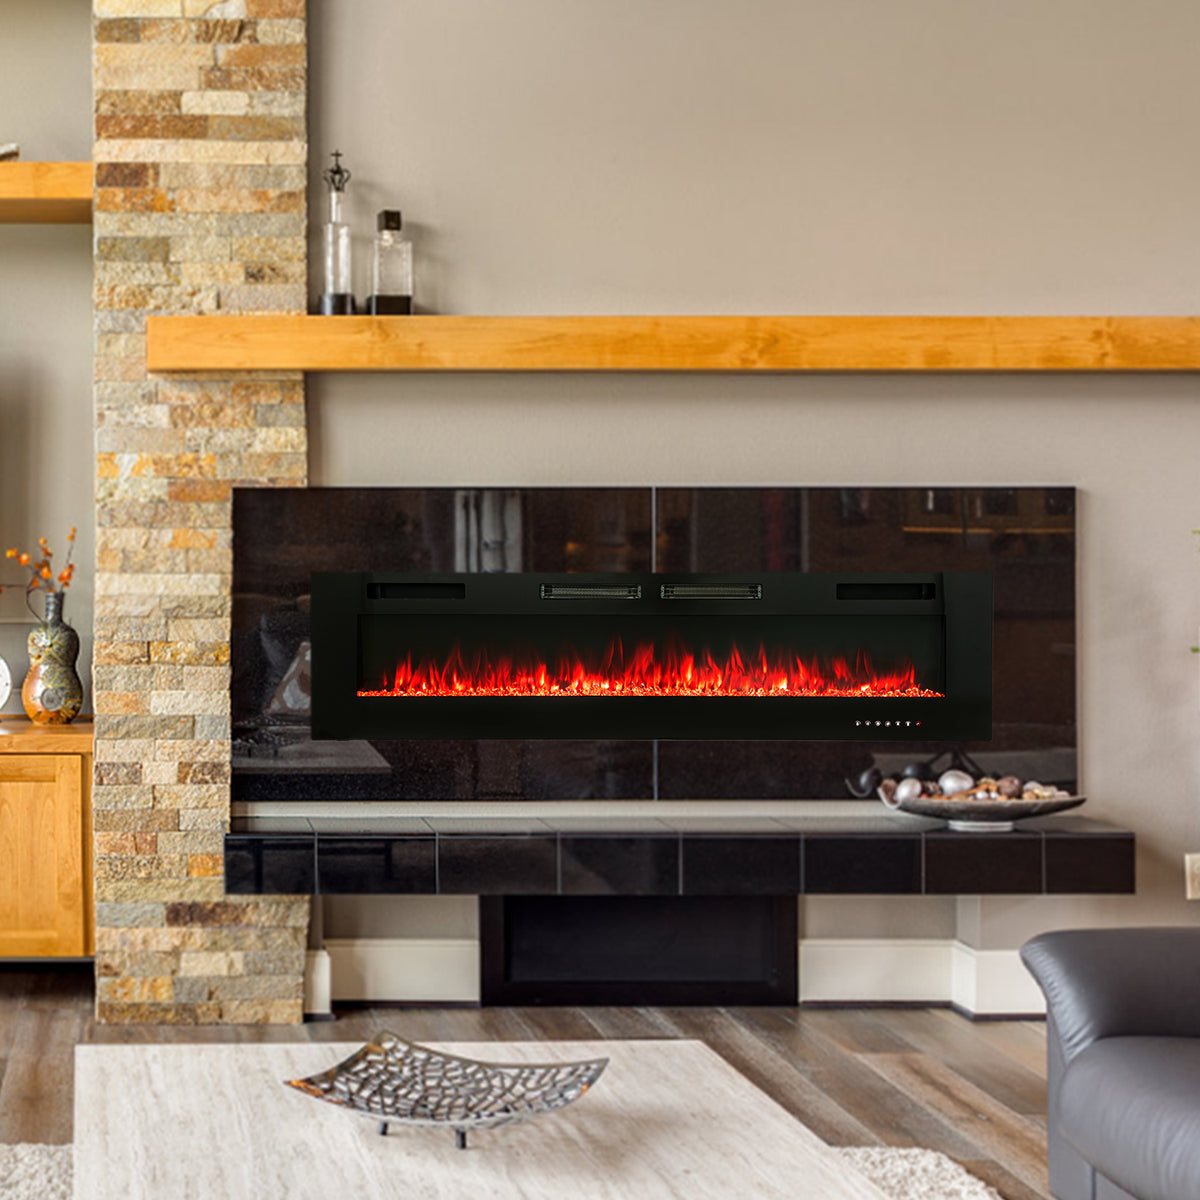 PHI VILLA 72 Ultra-thin Insert Wall Mounted Electric Fireplace, 7501500W